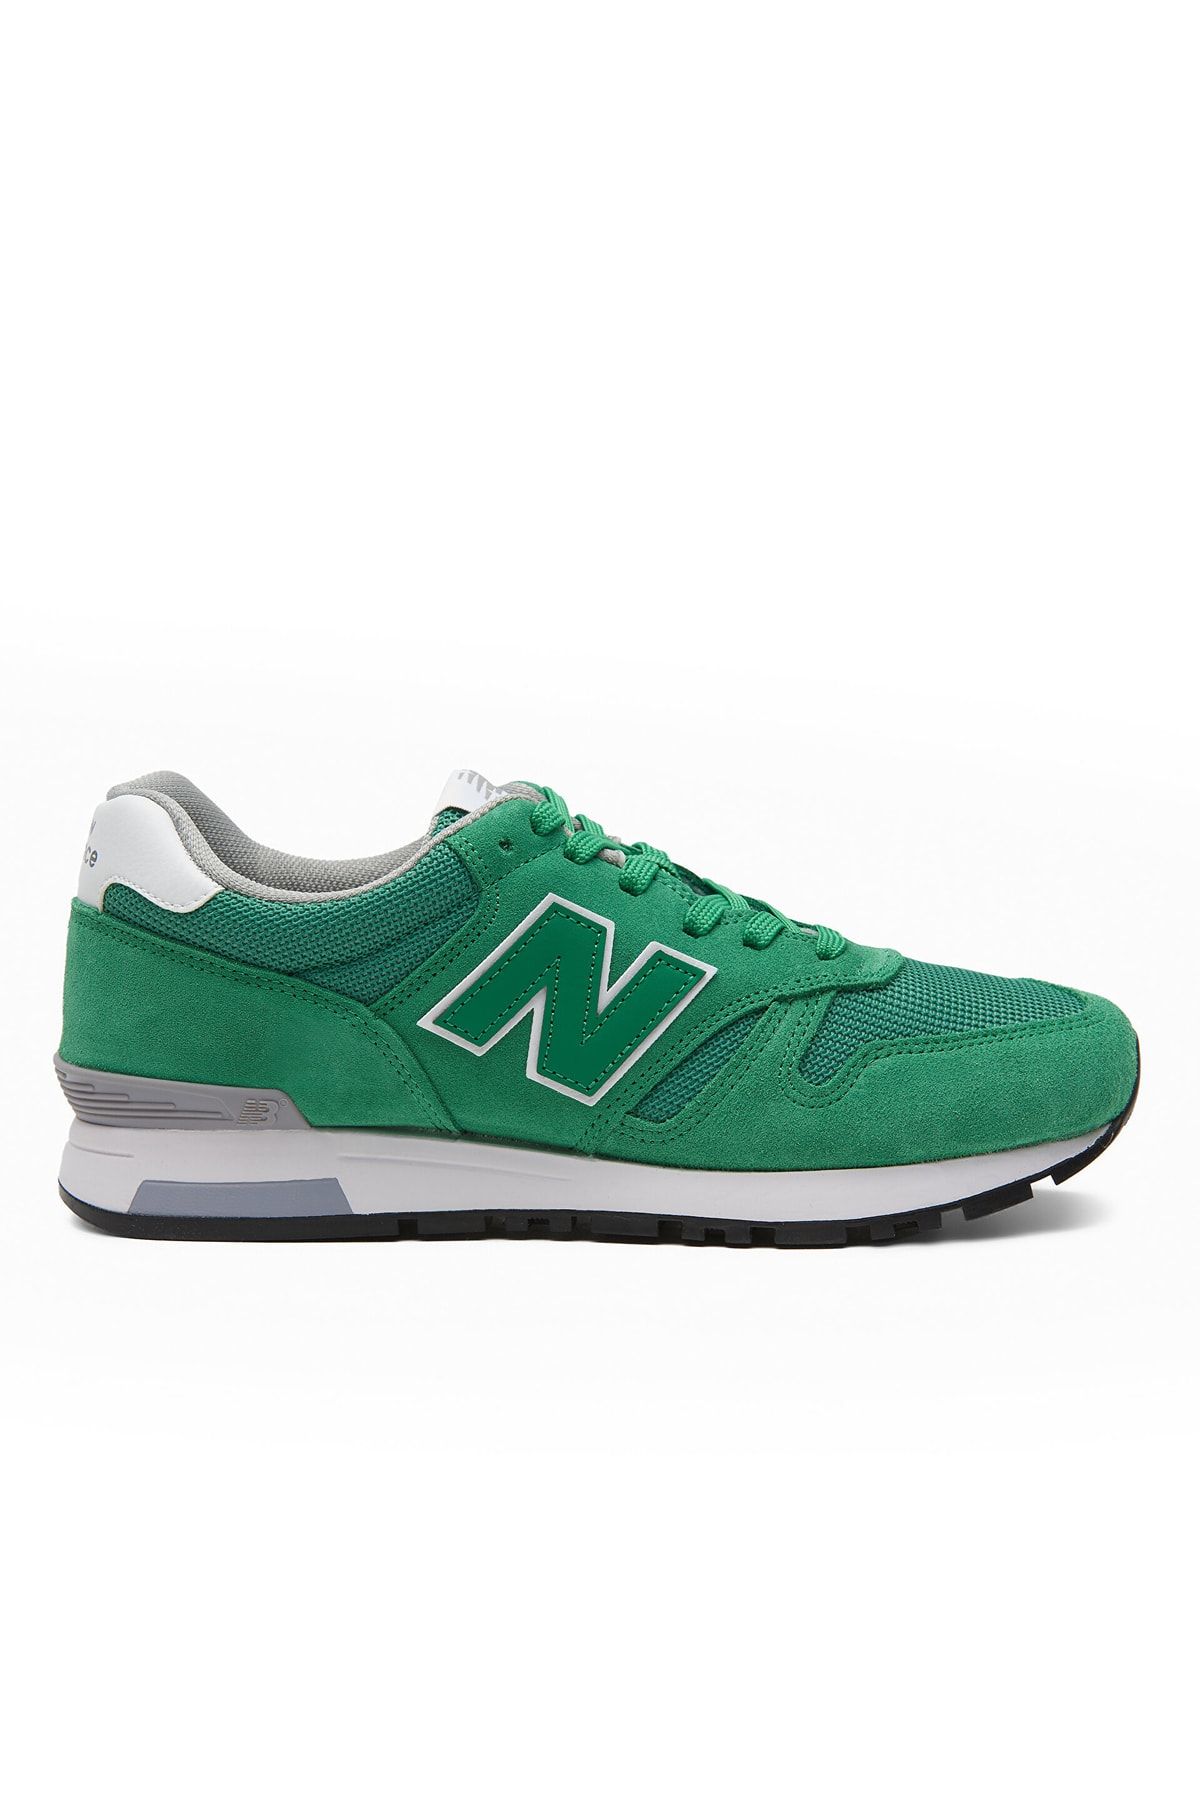 New Balance Nb Lifestyle Mens Shoes Erkek Yeşil Spor Ayakkabı Ml565grn